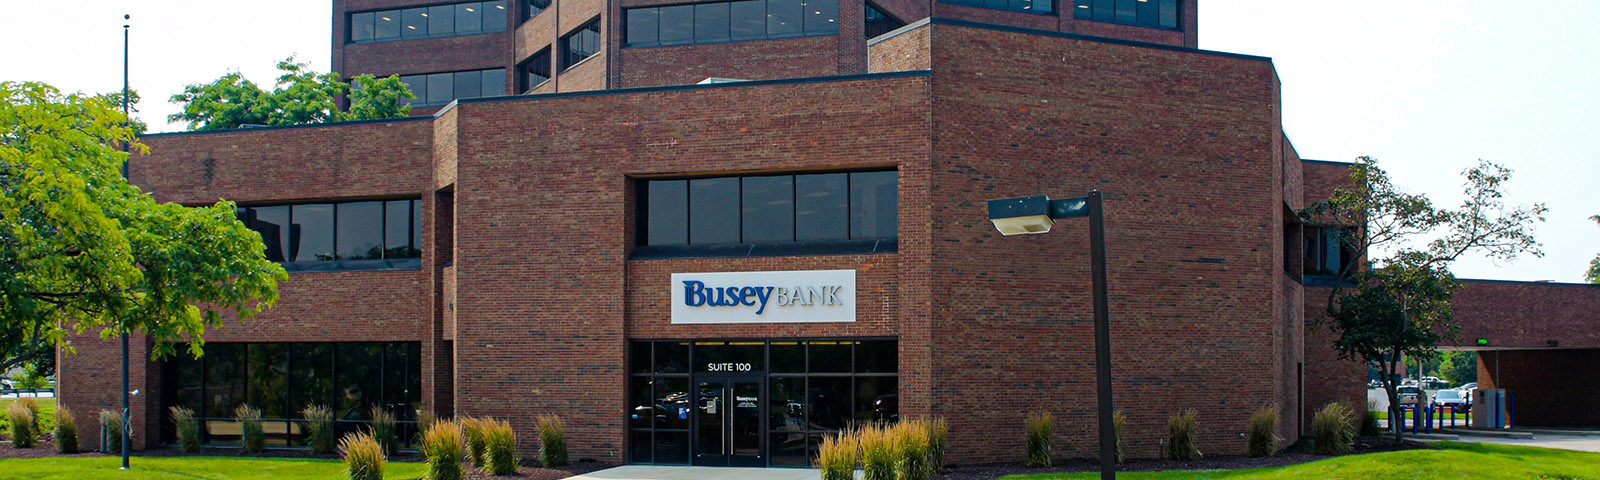 Busey Branch Building of Carmel, IN